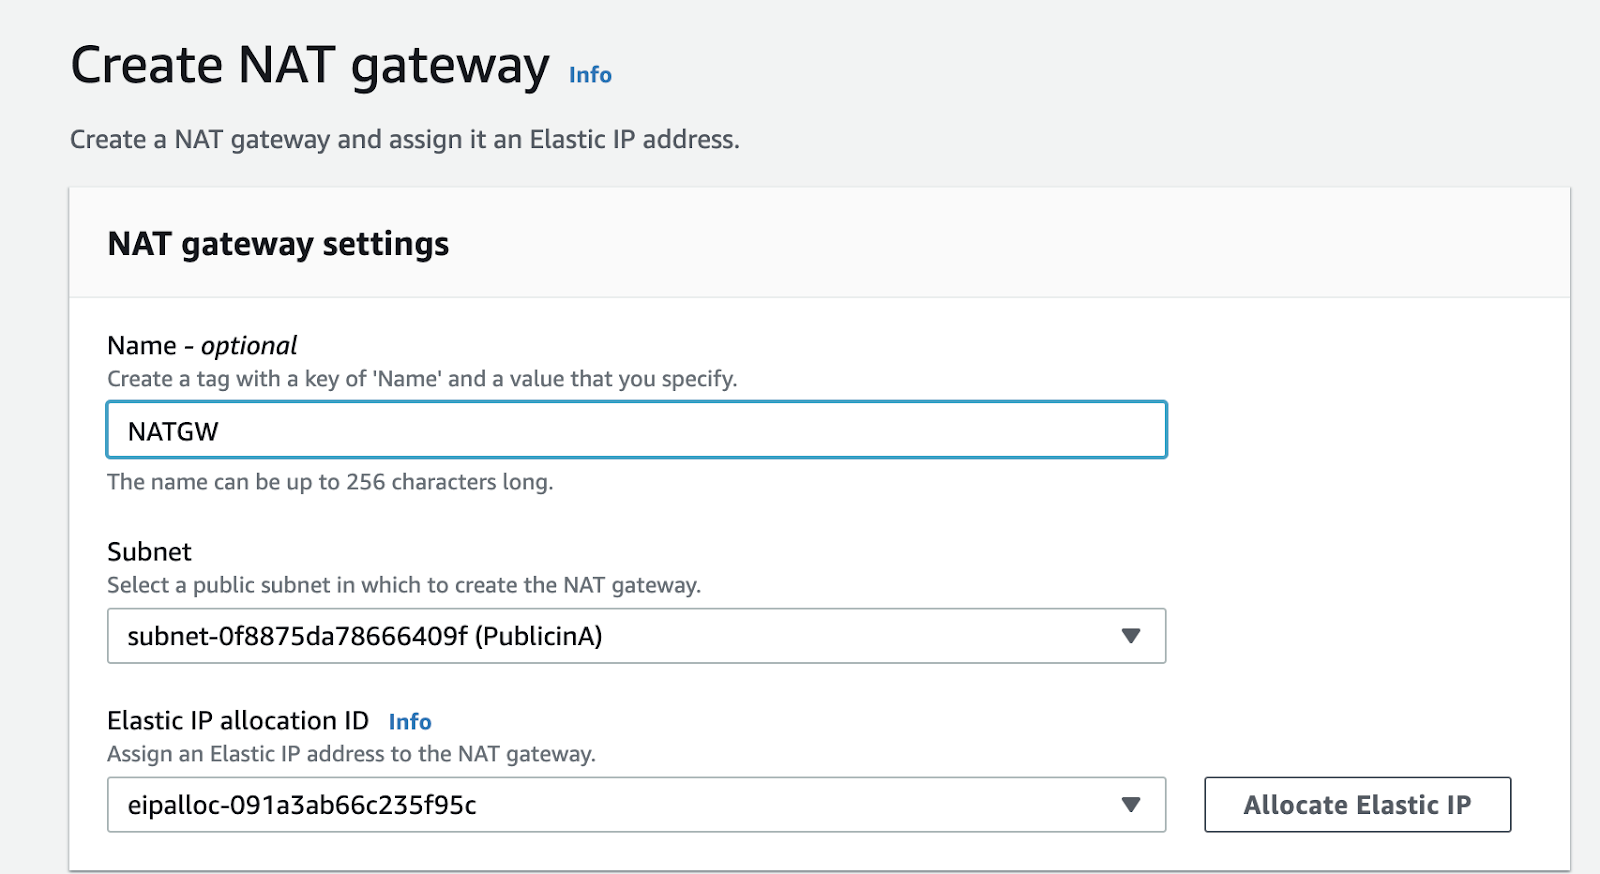 Create NAT gateway Dialog